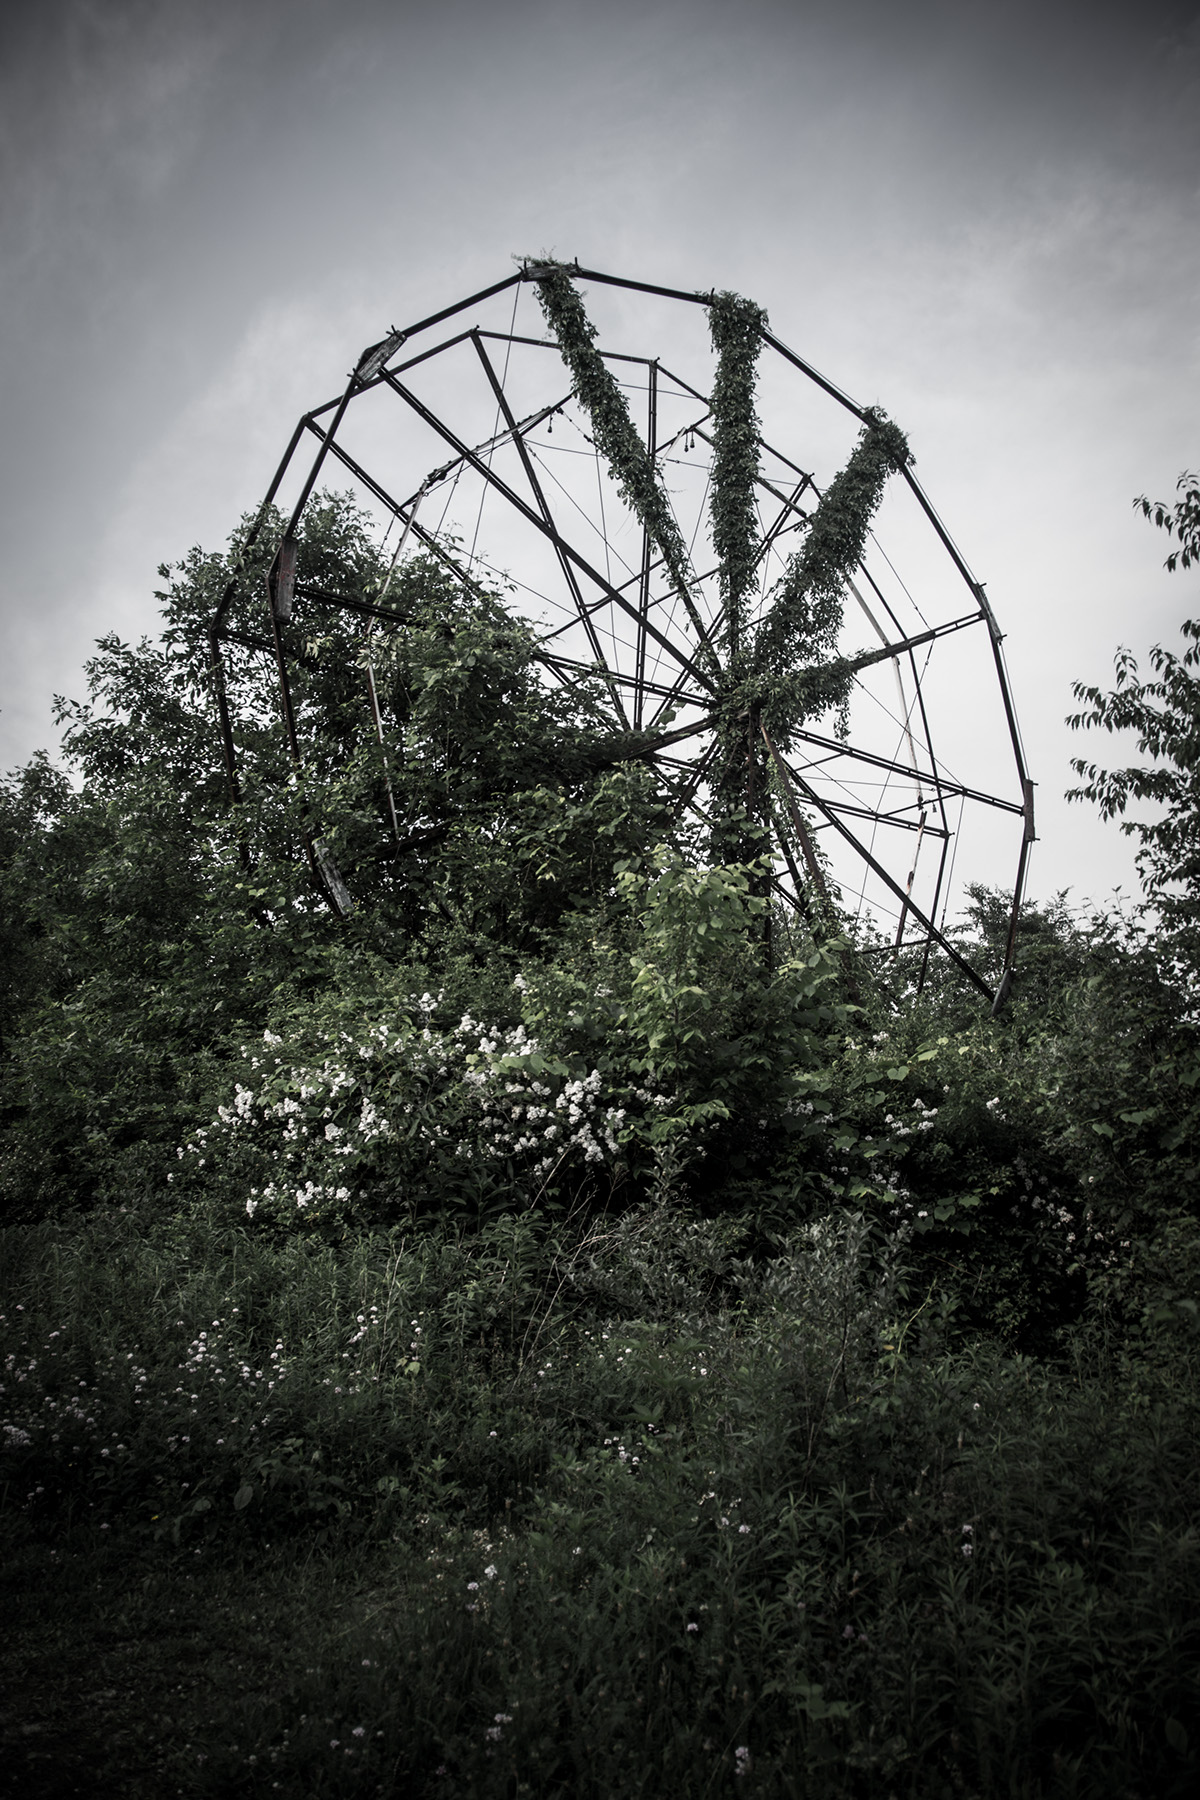 amusement park abandoned decay over growth chippewa lake Park